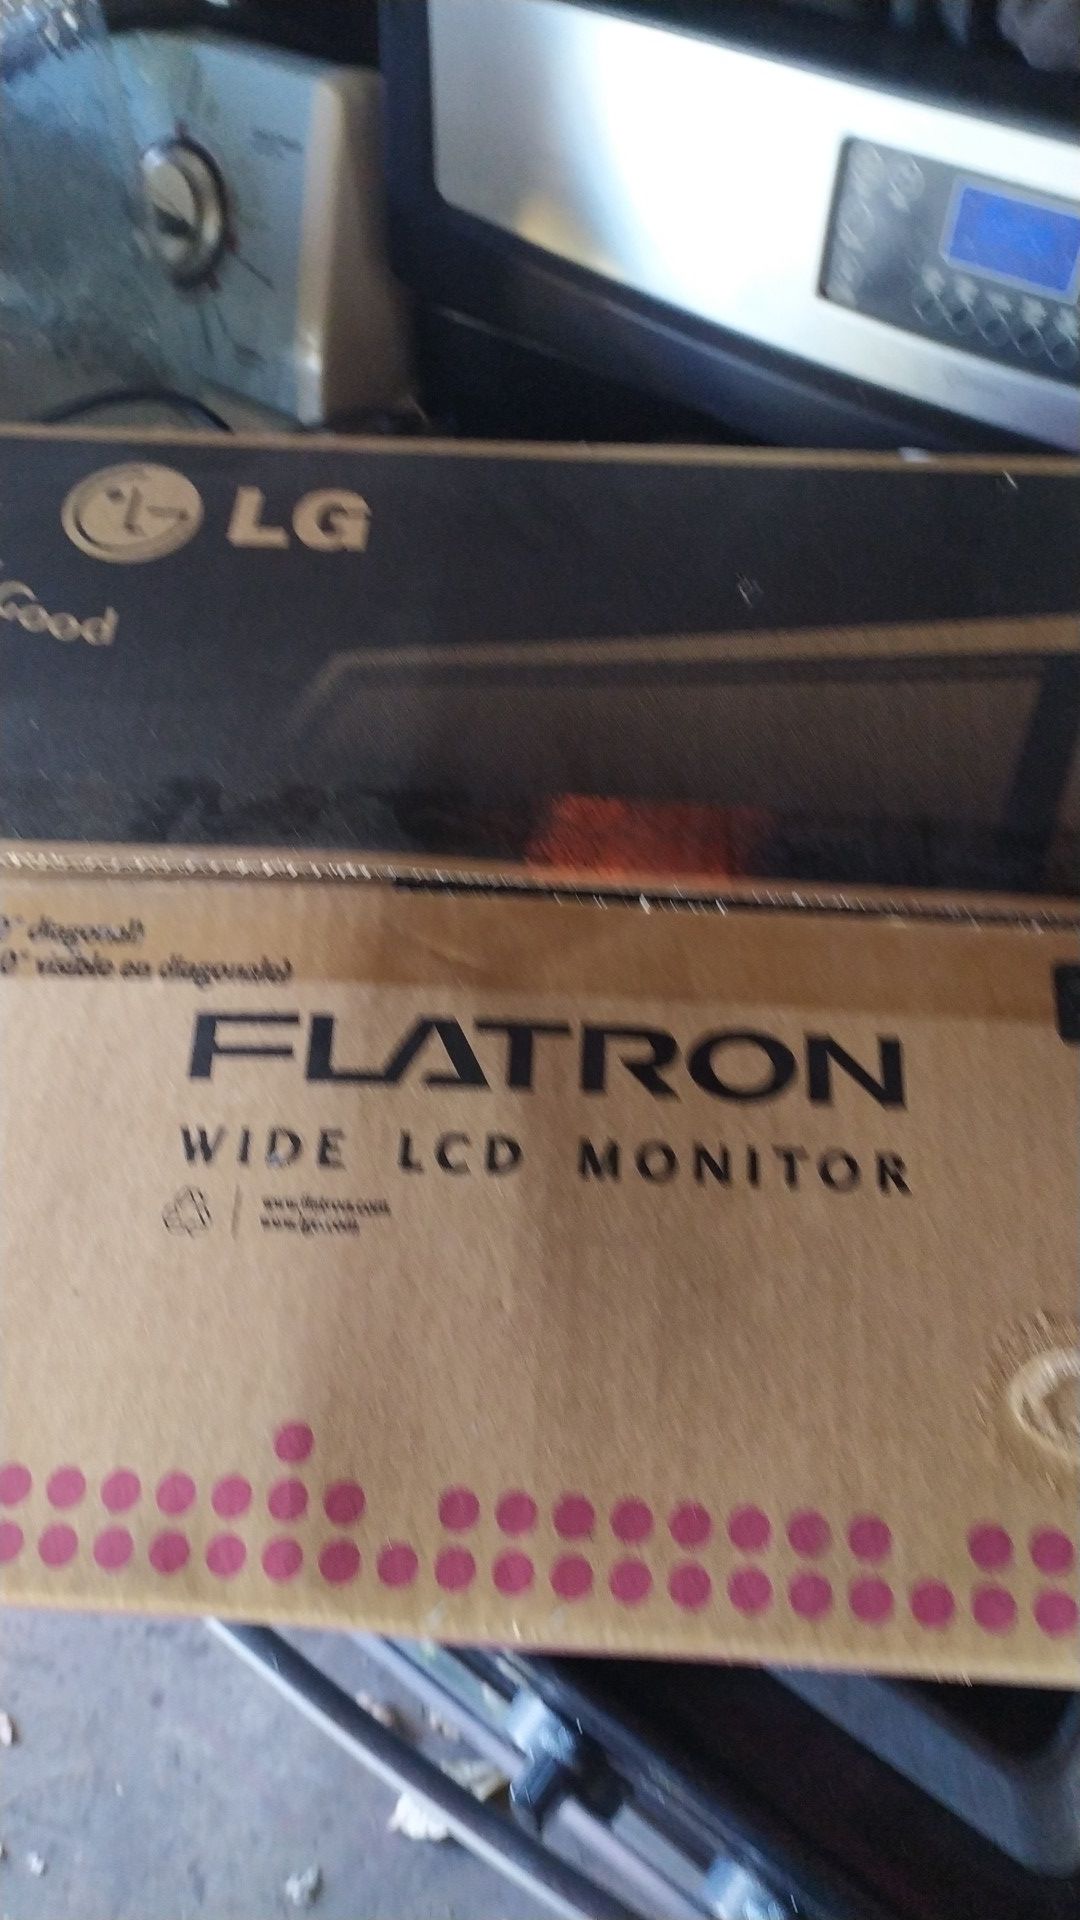 LG flatron wide LCD monitor